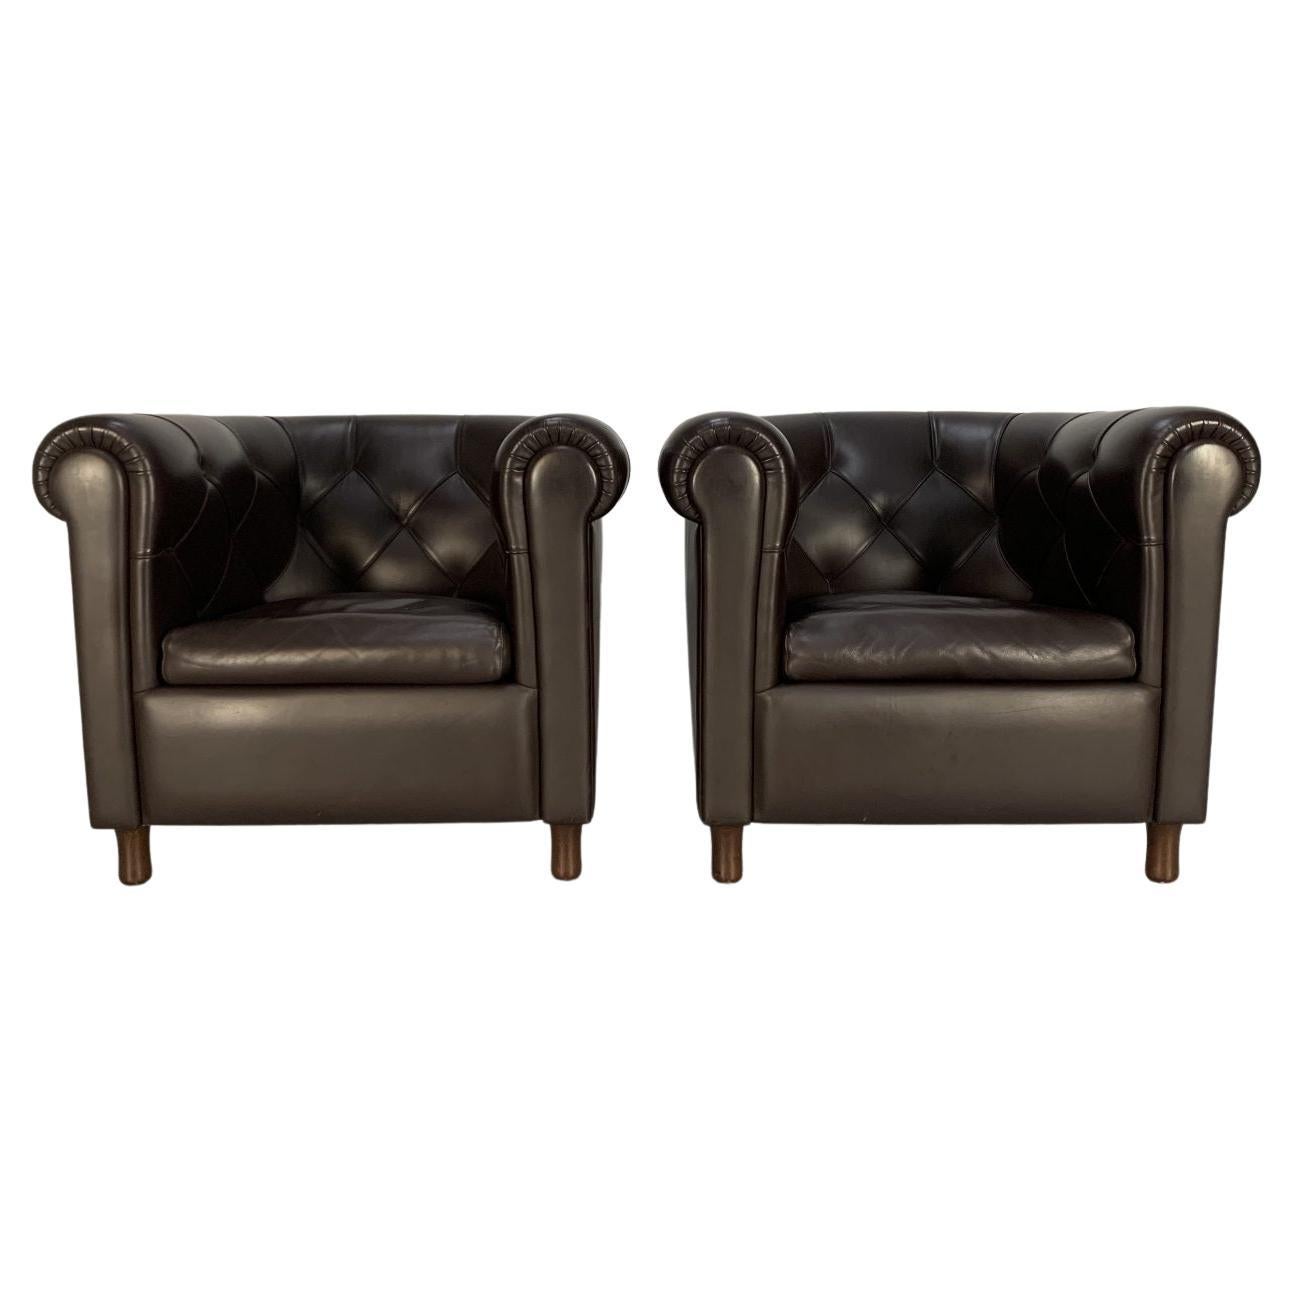 2 Poltrona Frau “Arcadia” Armchairs, in “Pelle Frau” Dark Brown Leather For Sale